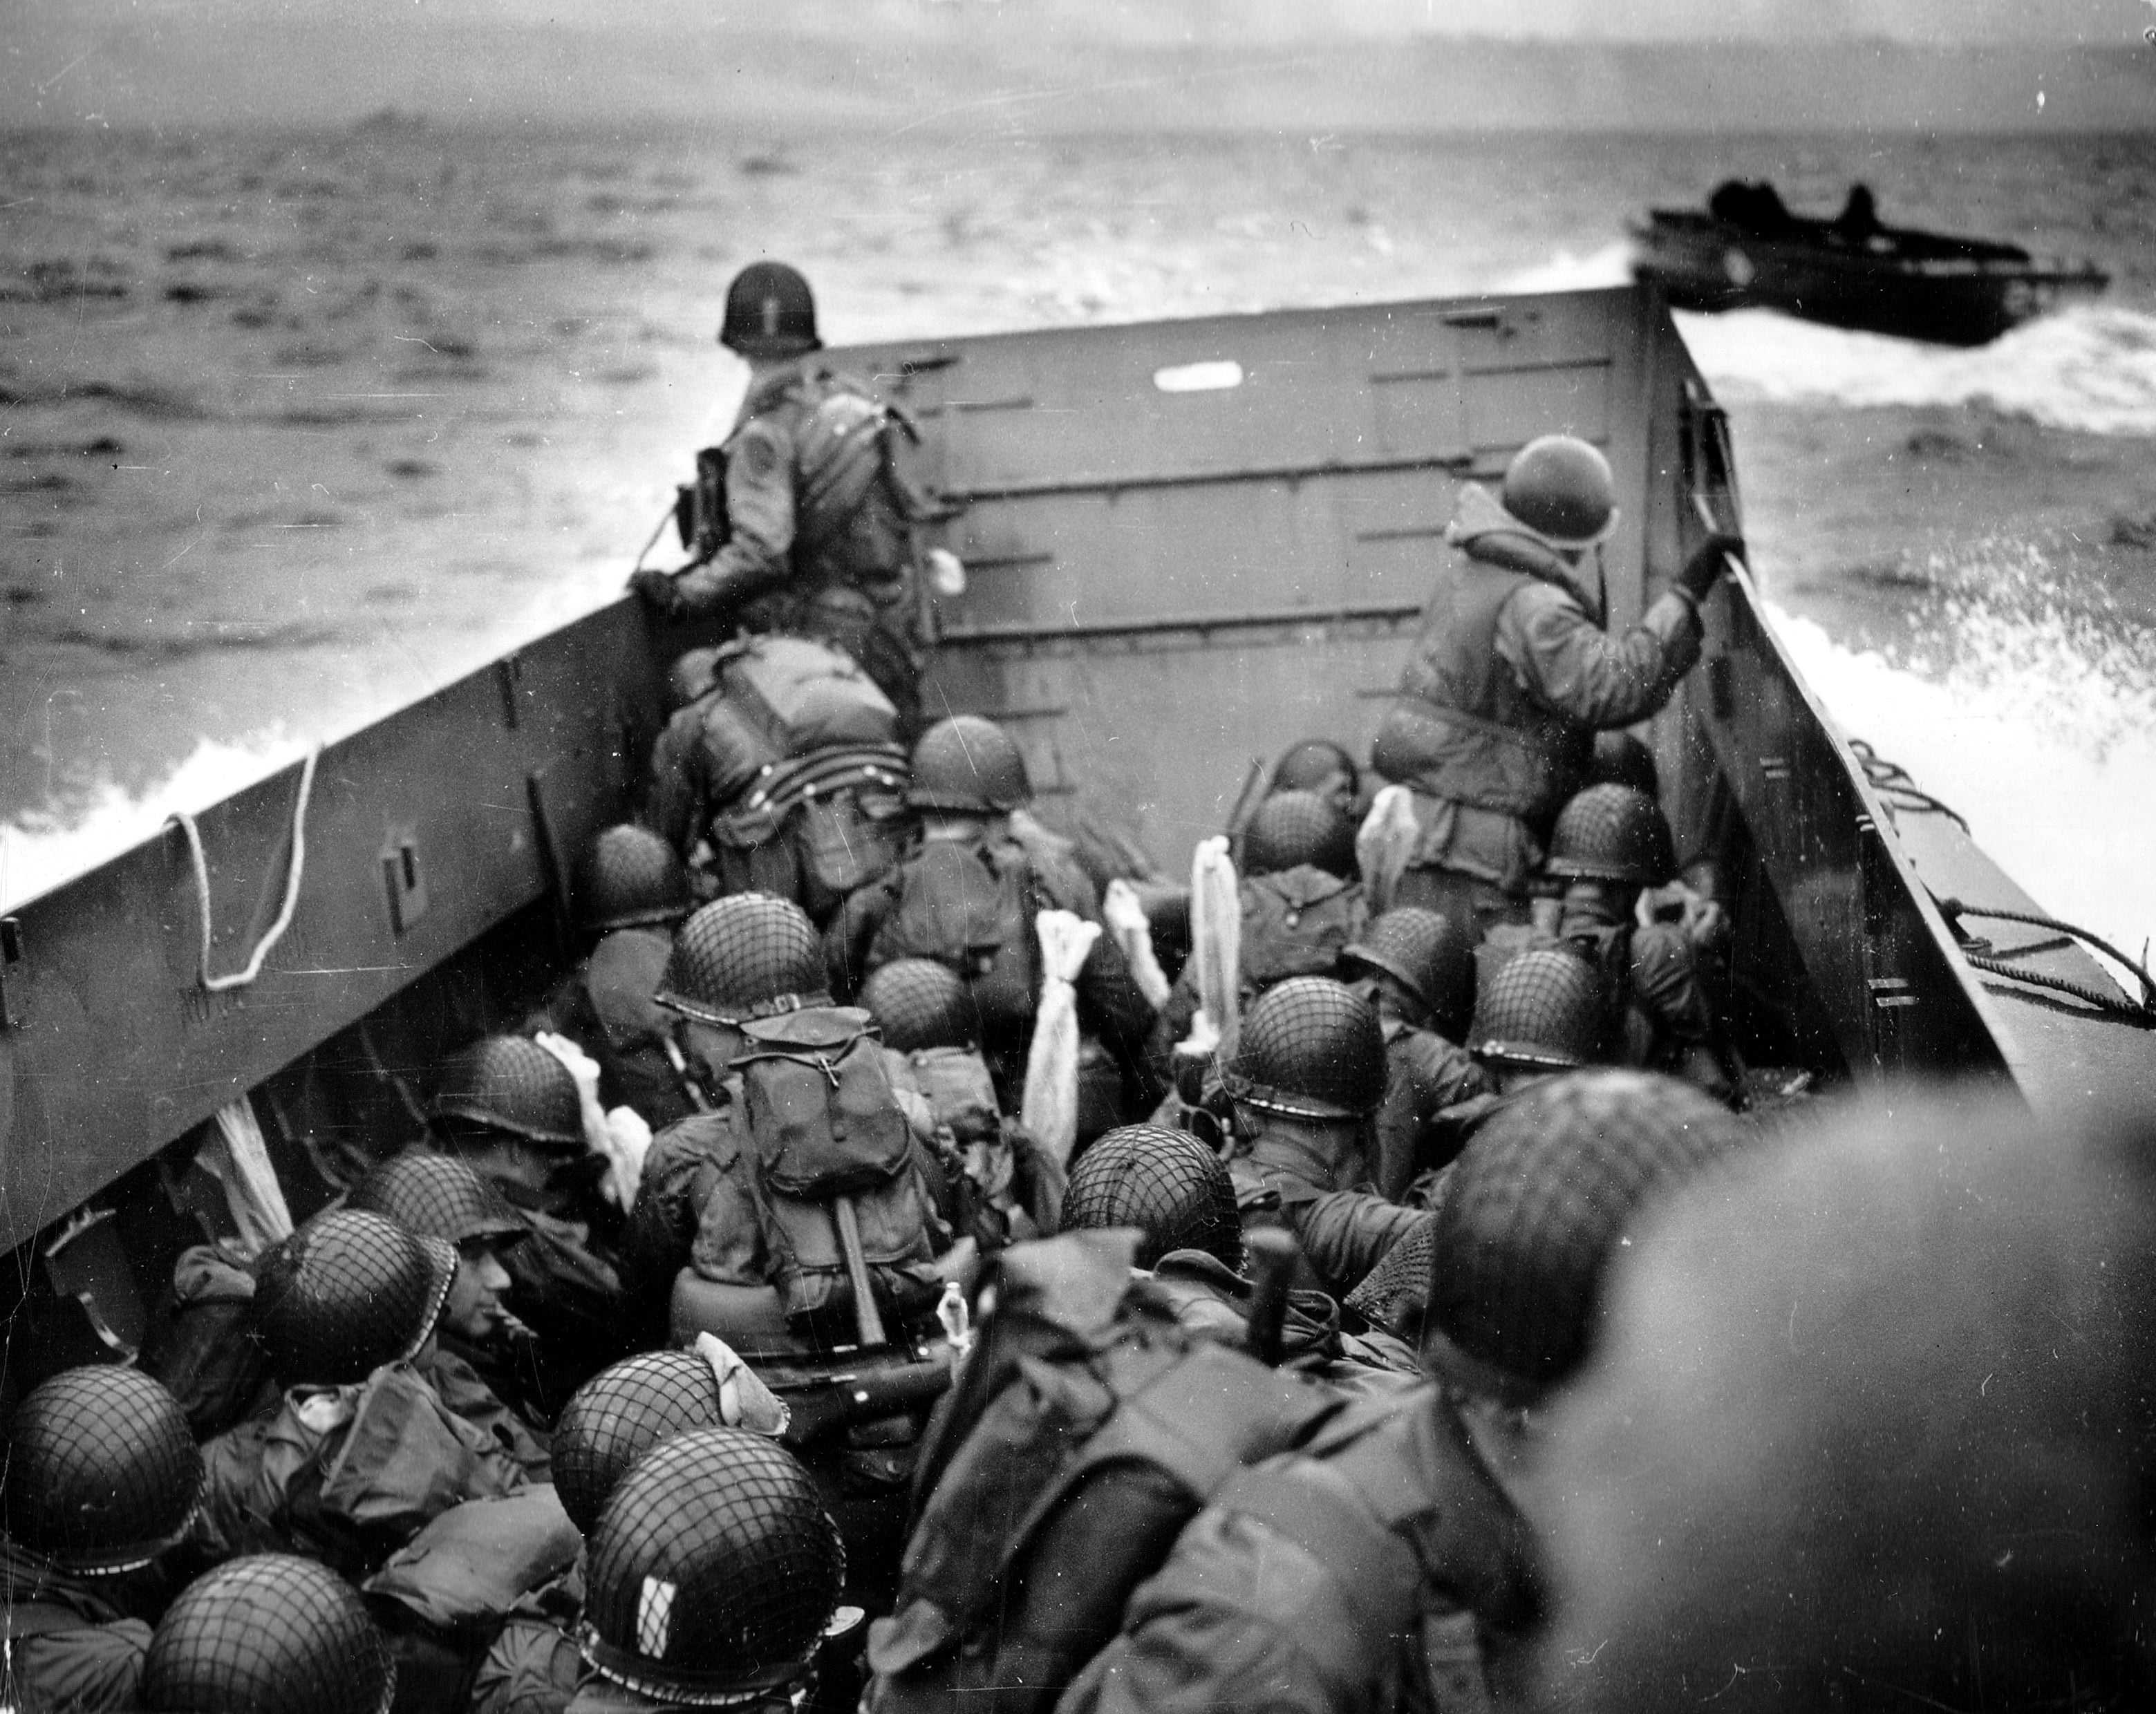 combat helmet lot, military, World War II, Omaha Beach, people